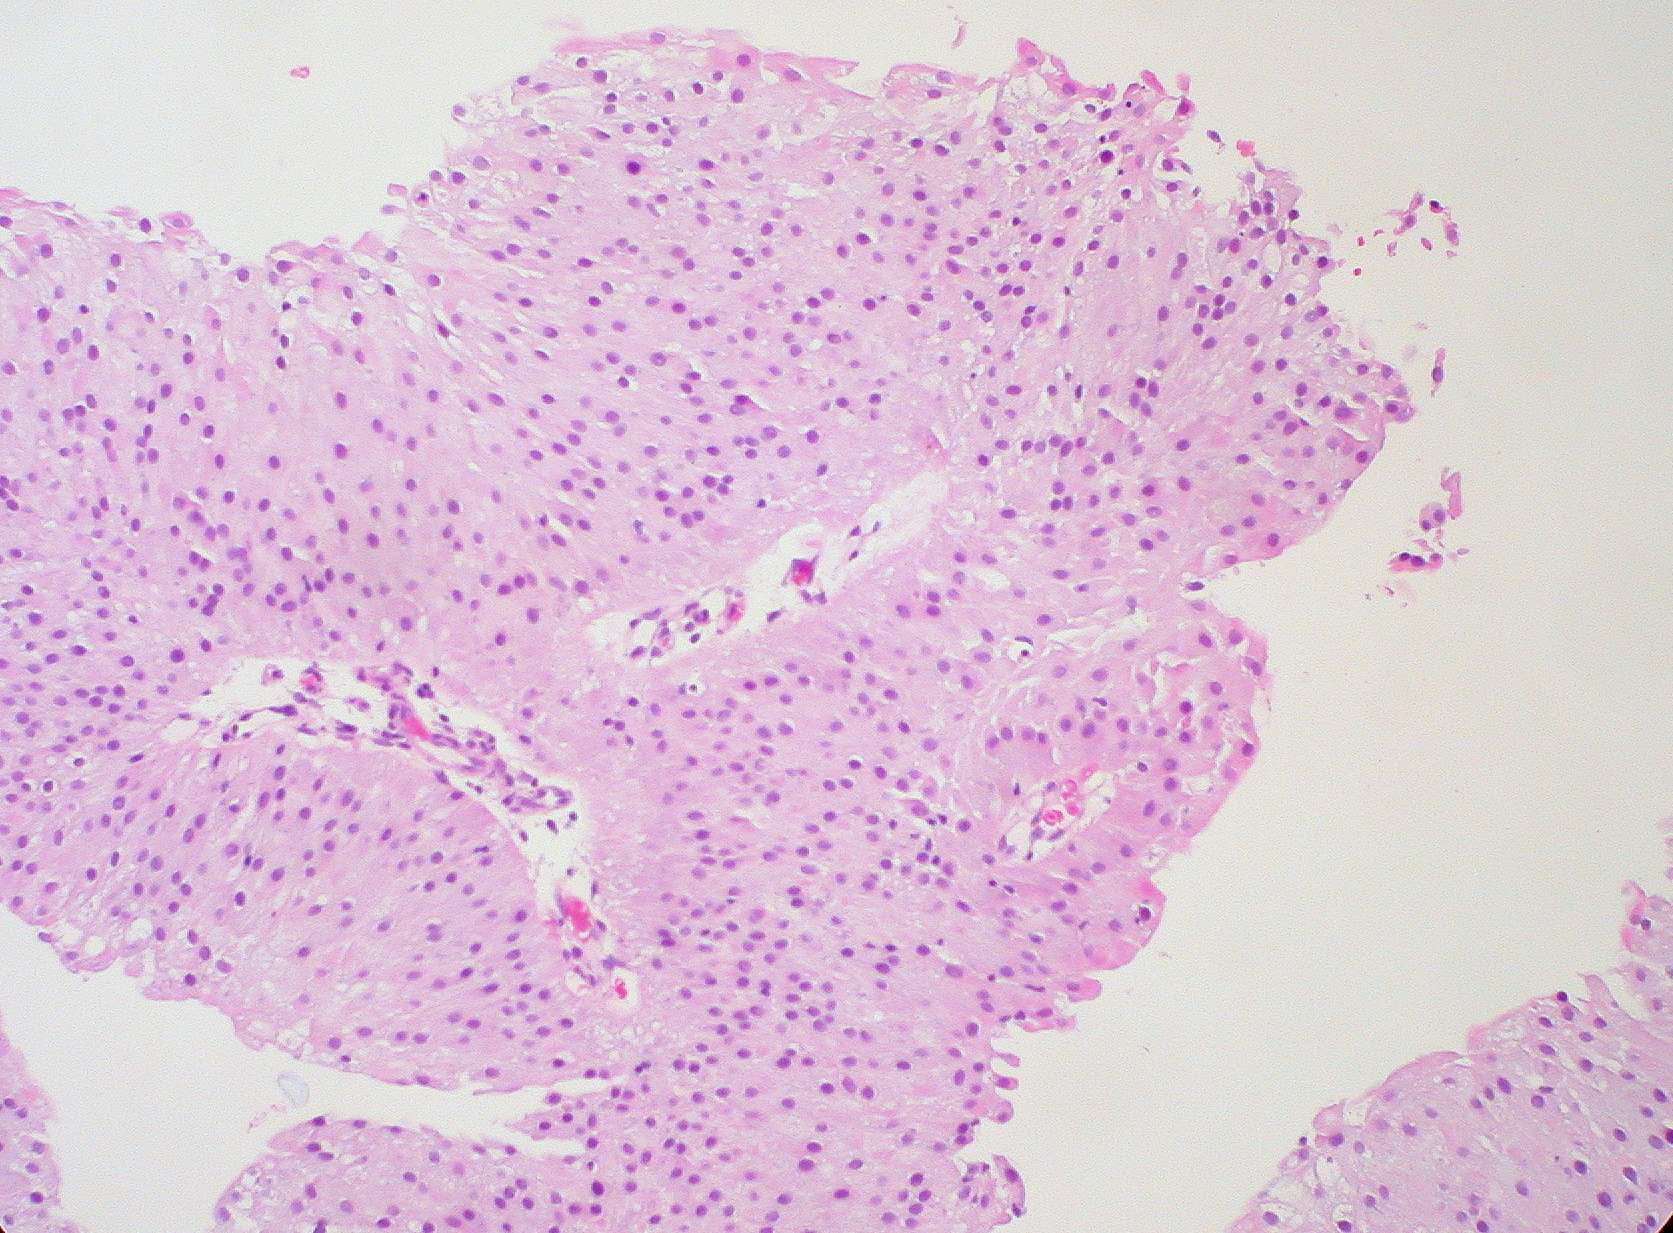 Papillary urothelial carcinoma invasive icd 10